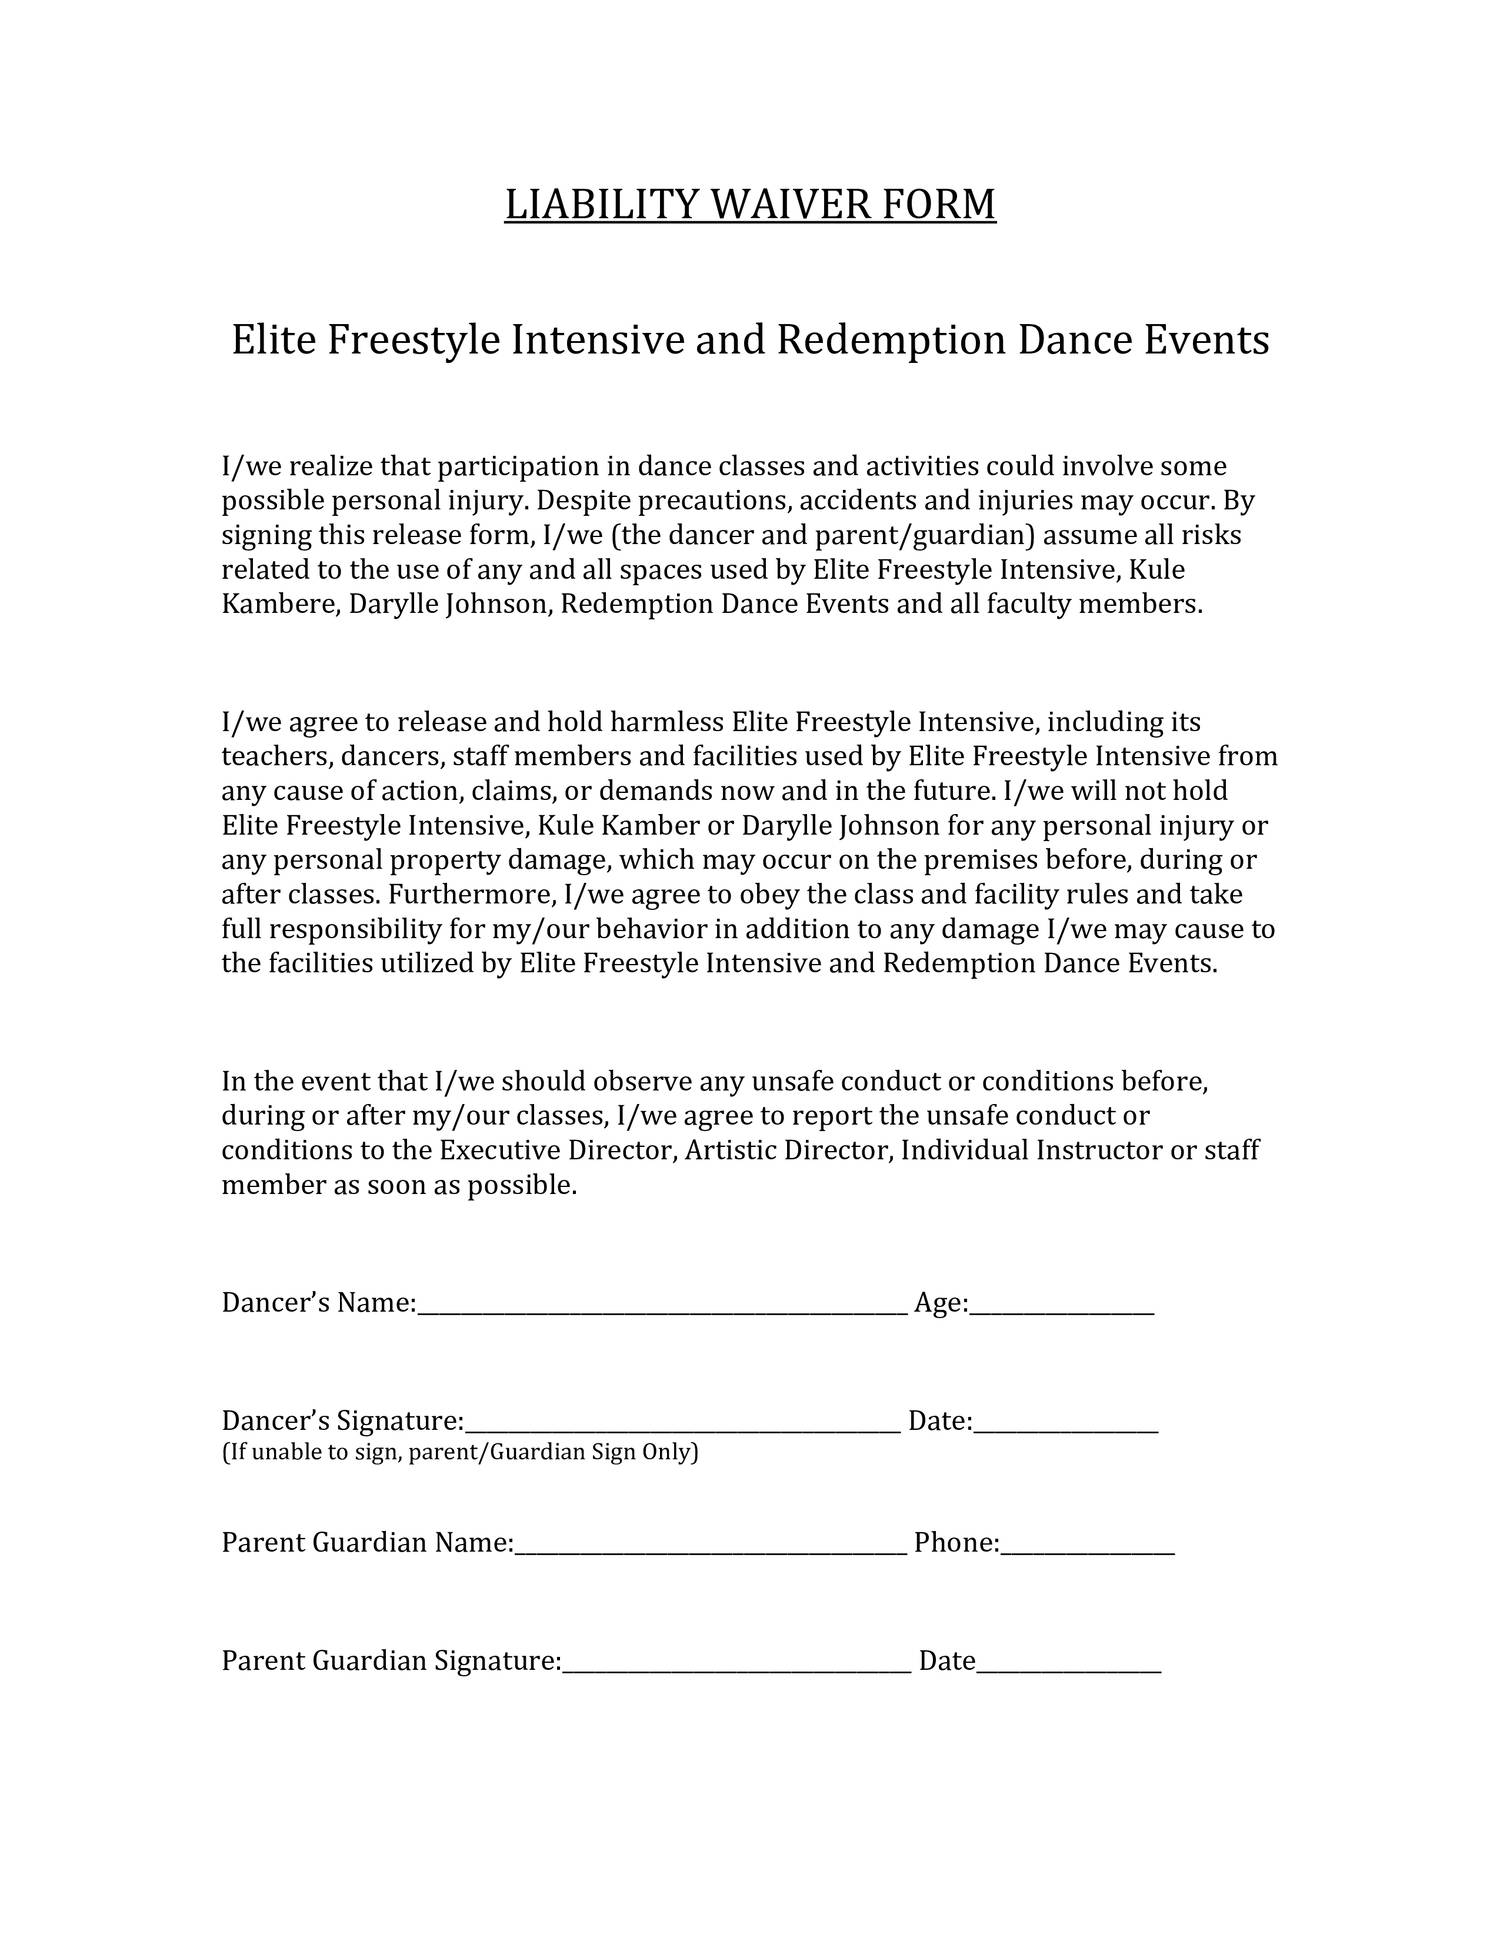 waiver-form-elite-freestyle-intensive-redemption-dance-events-pdf-docdroid